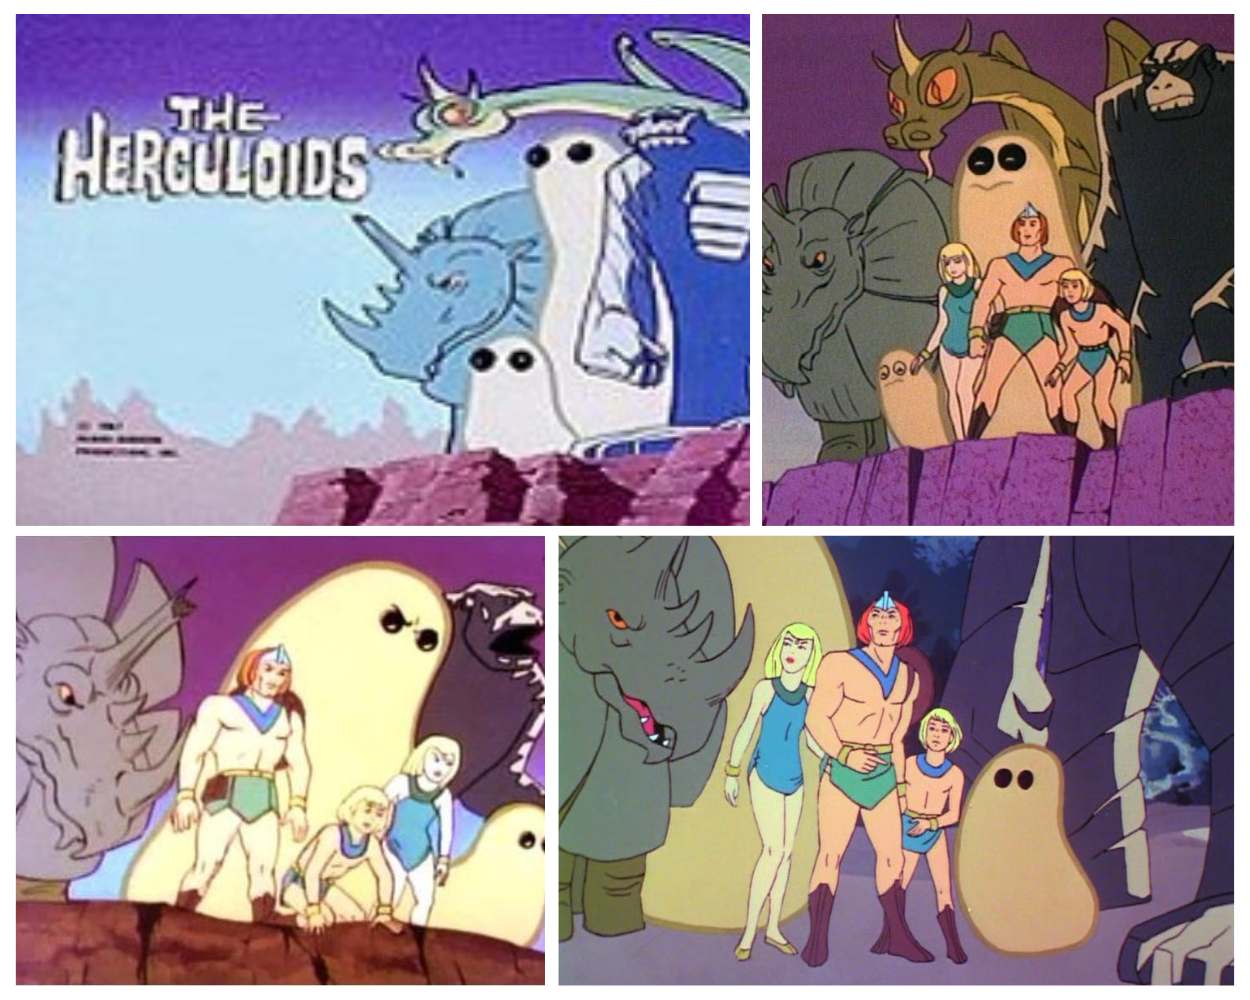 The Herculoids and Hanna-Barbera